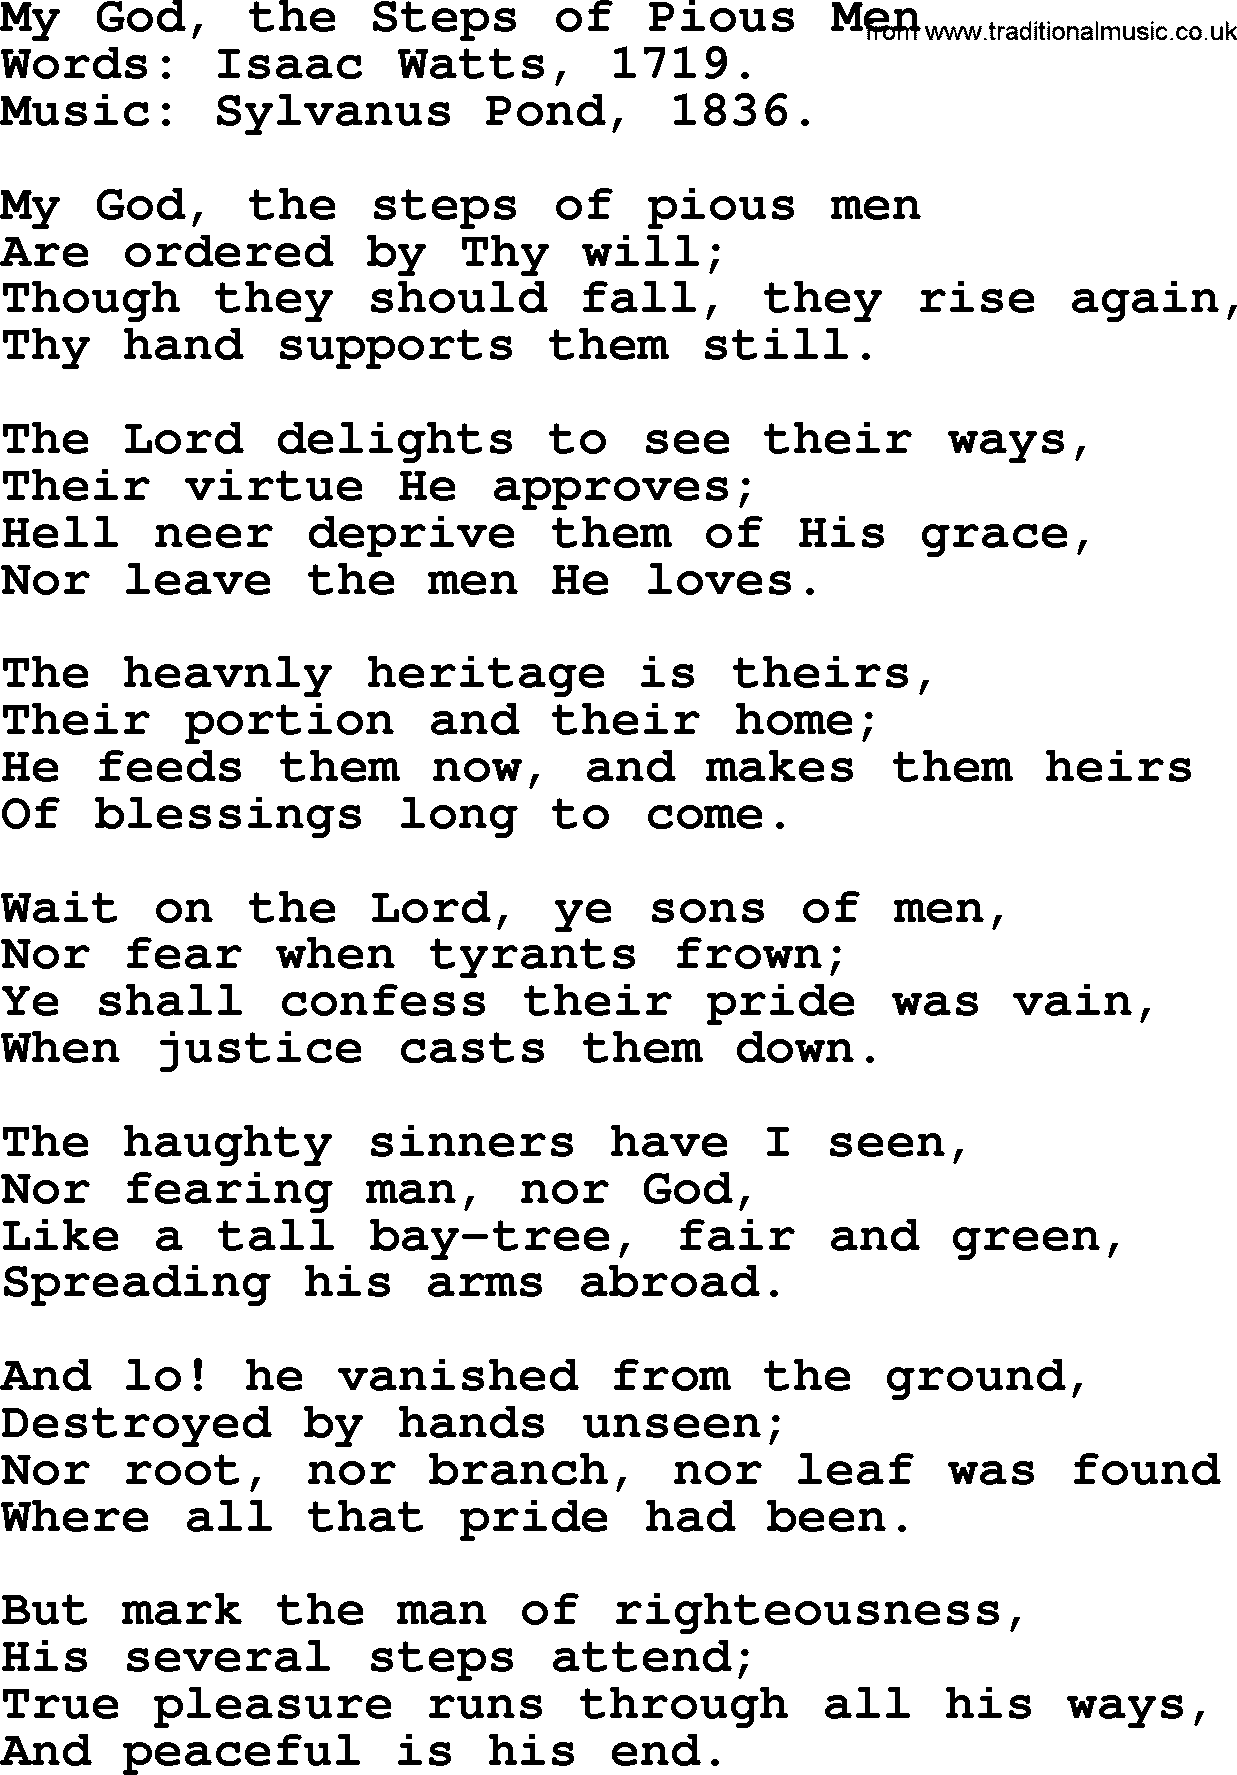 Isaac Watts Christian hymn: My God, the Steps of Pious Men- lyricss